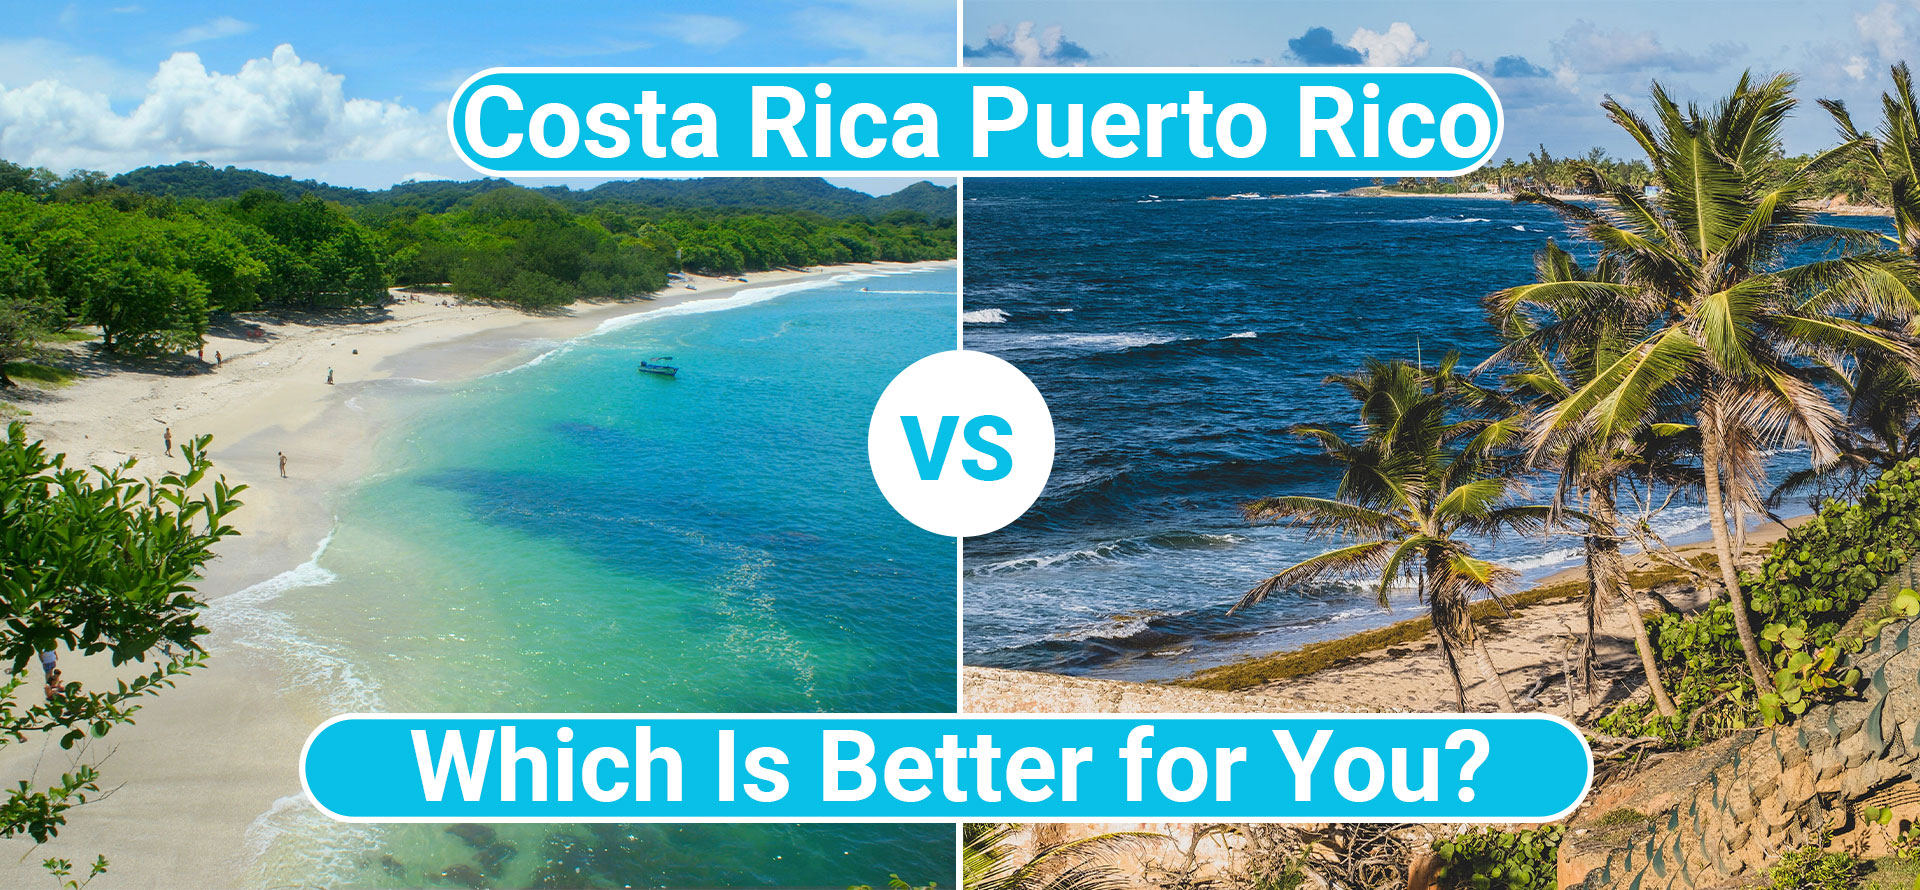 Costa rica vs puerto rico.